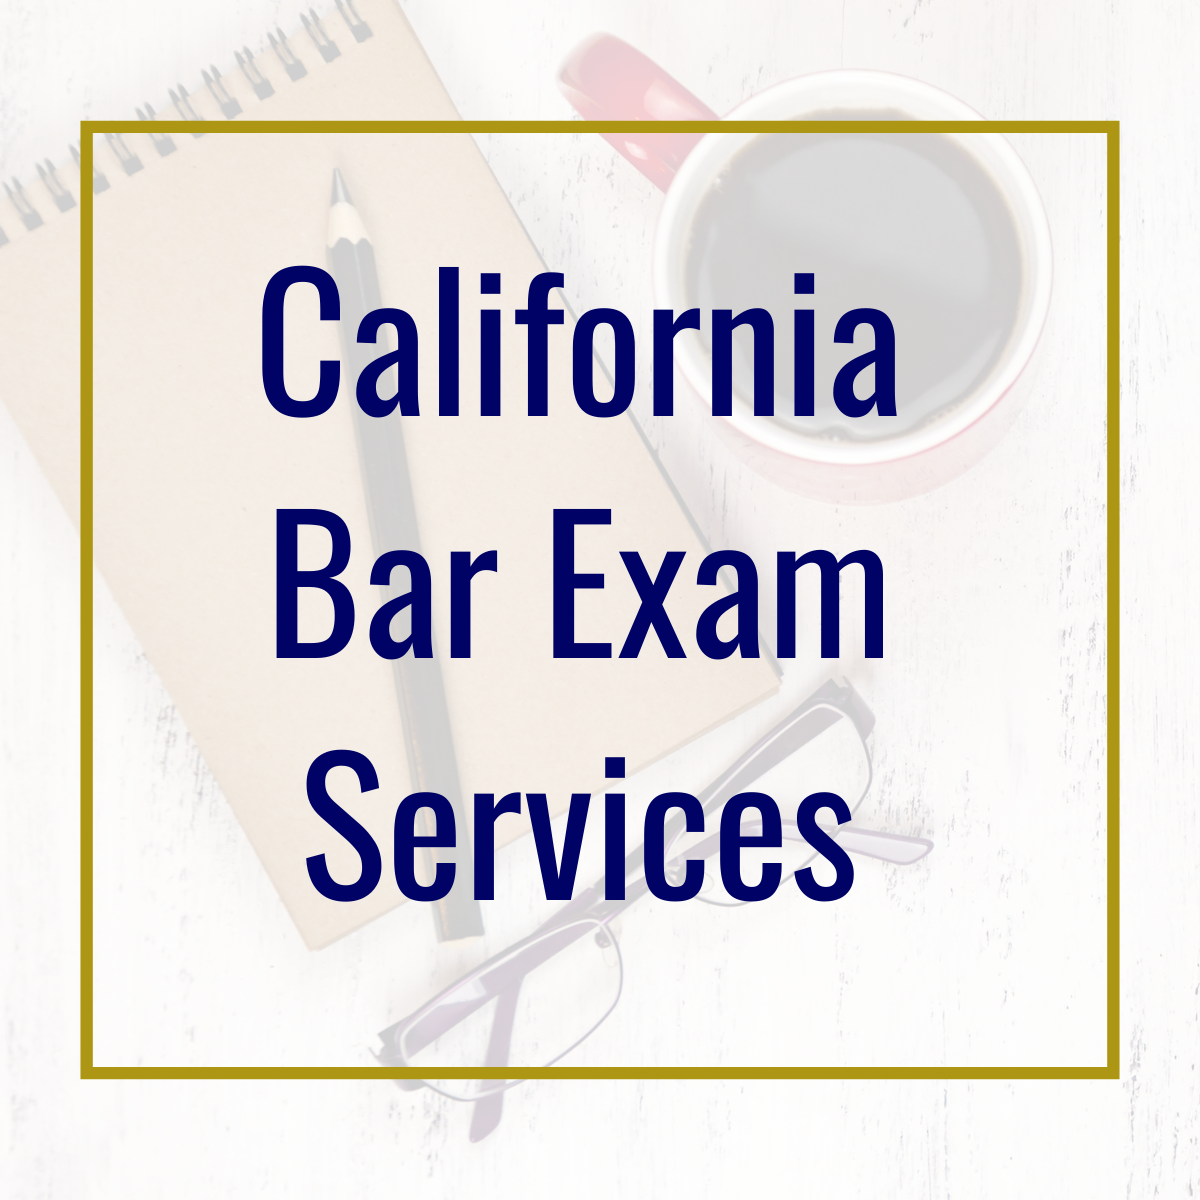 California Bar Exam Services JD Advising